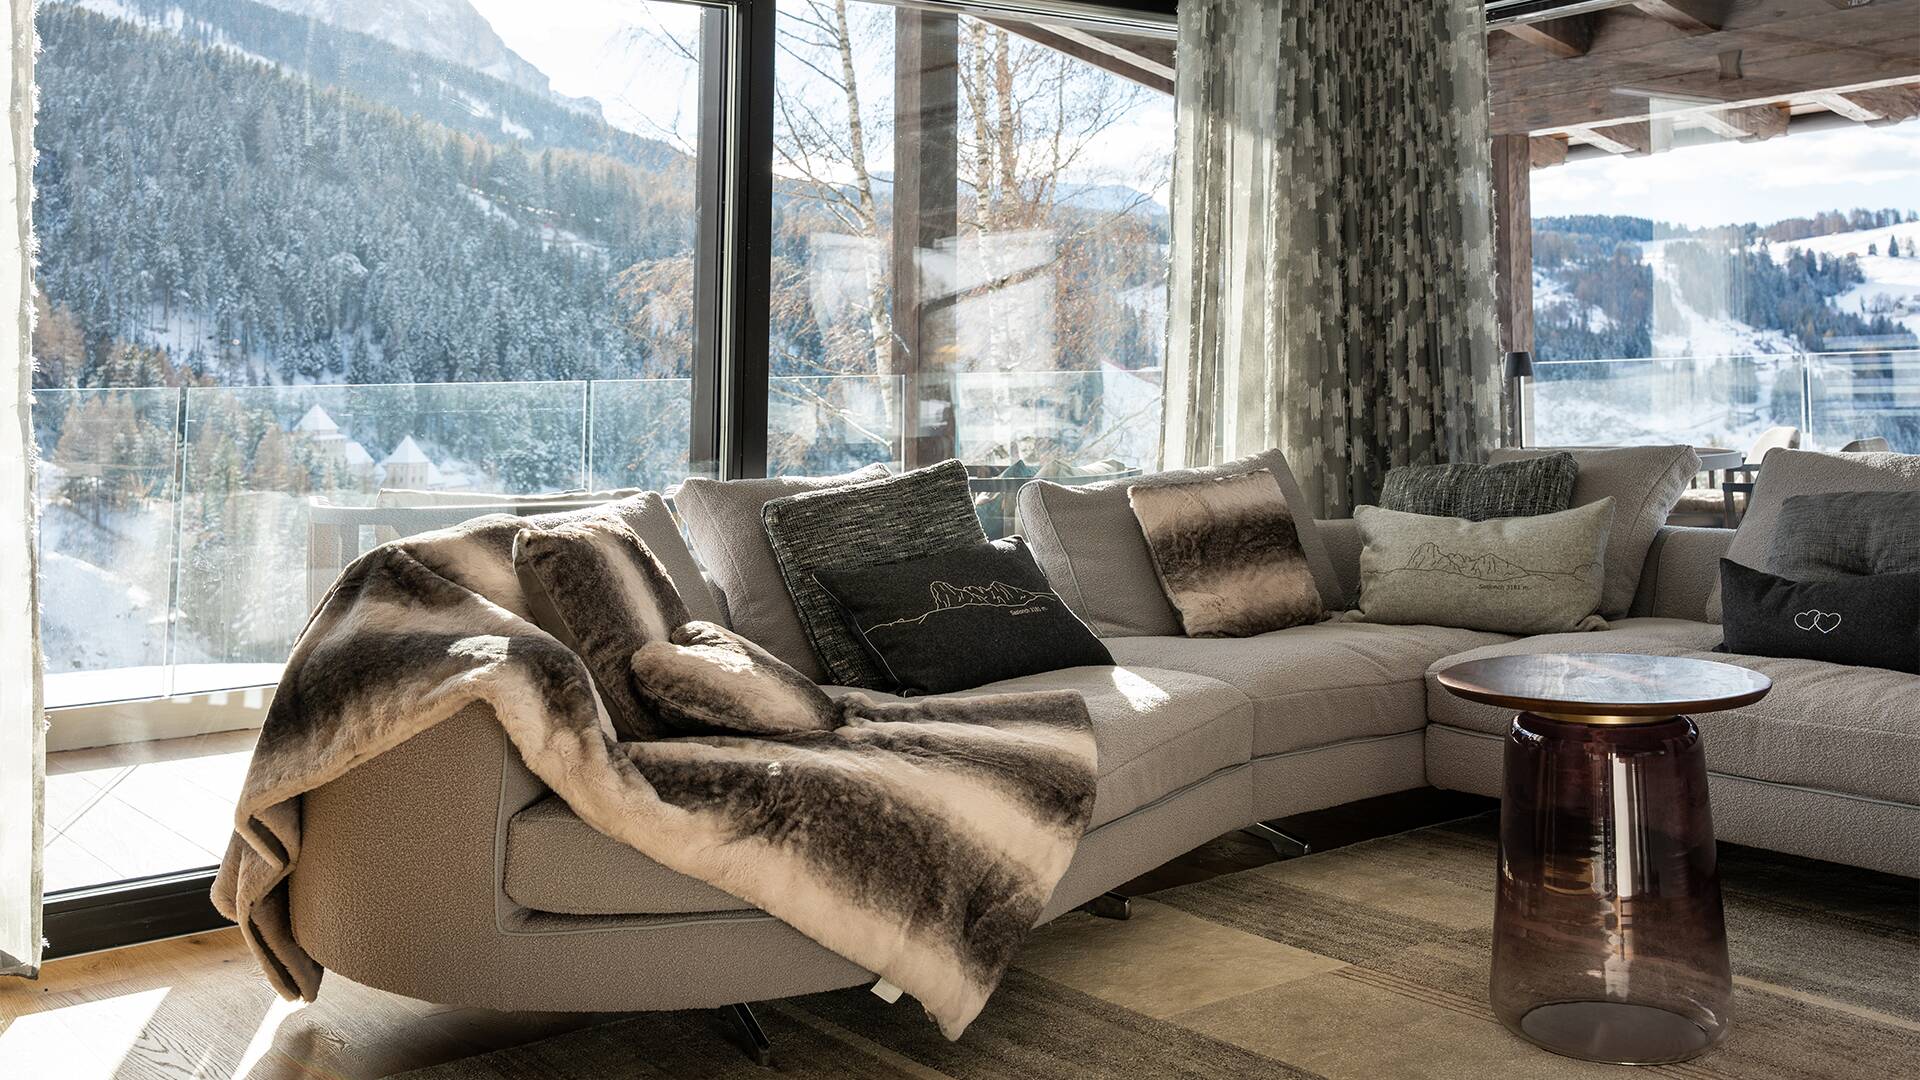 luxury Chalet Sambuco for rent in the Italian Alps